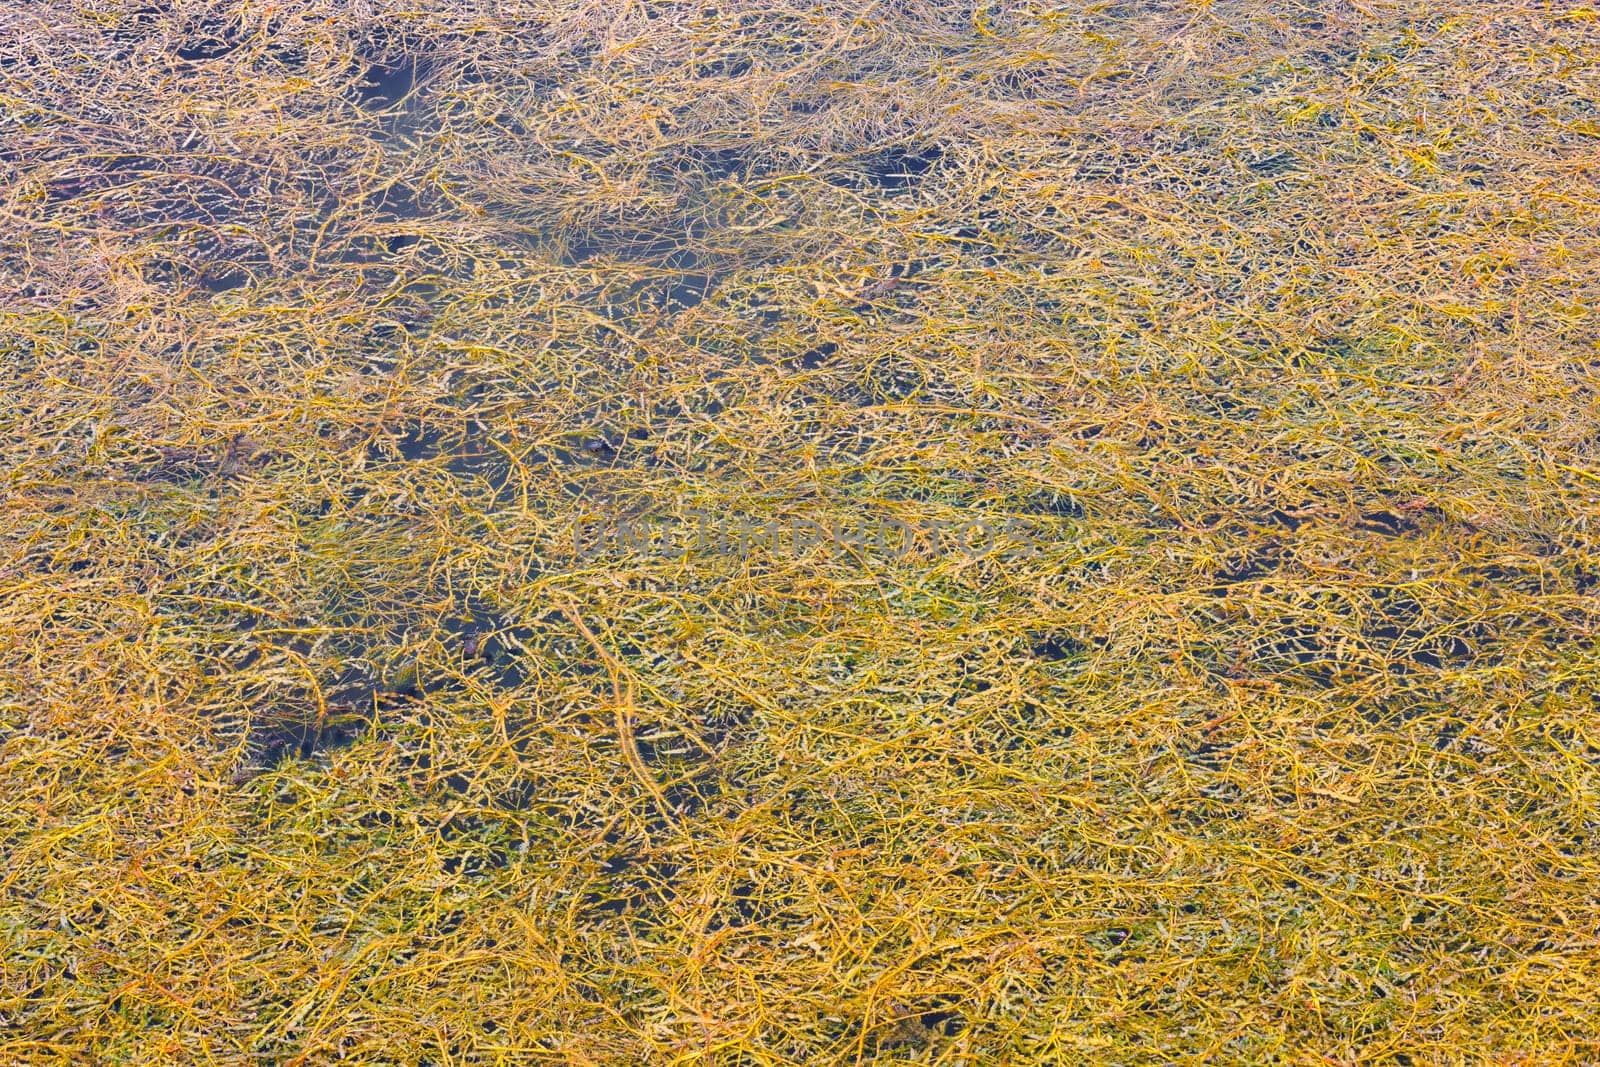 Dense floating curled pondweed potamogeton crispus on pond surface at sunny day by z1b